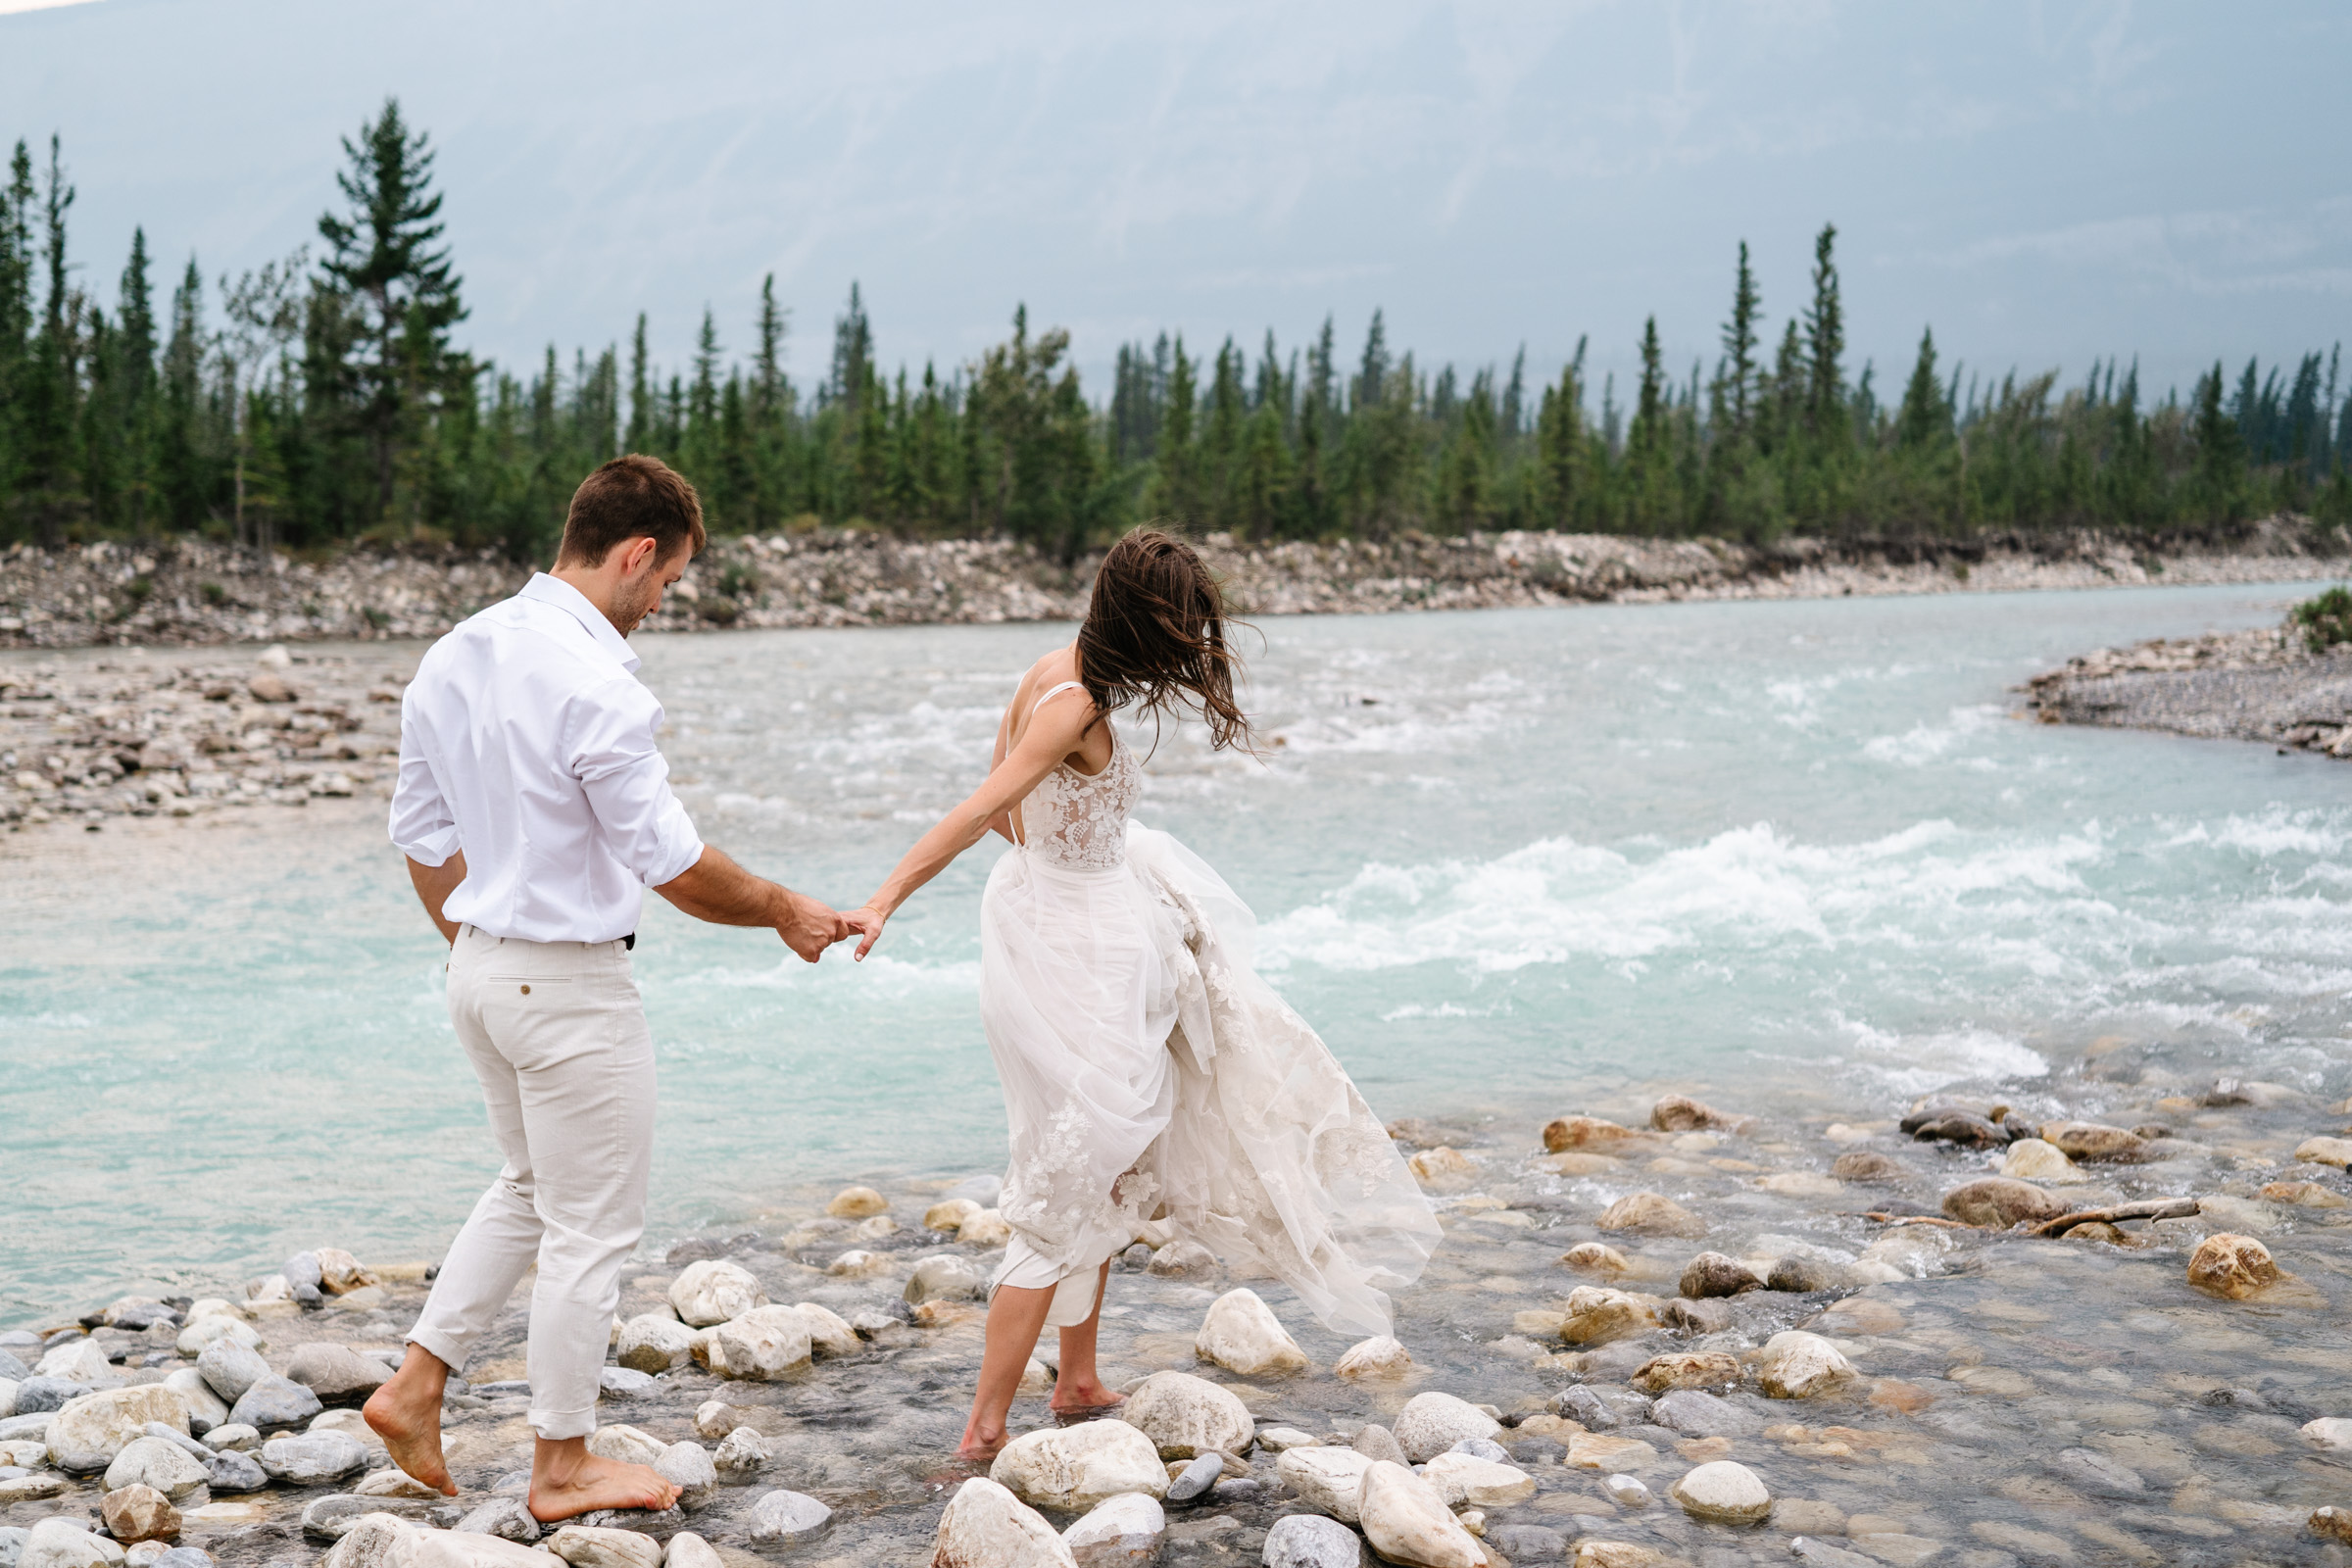 Barefoot bride leads groom over rocks in river at Jasper National Park